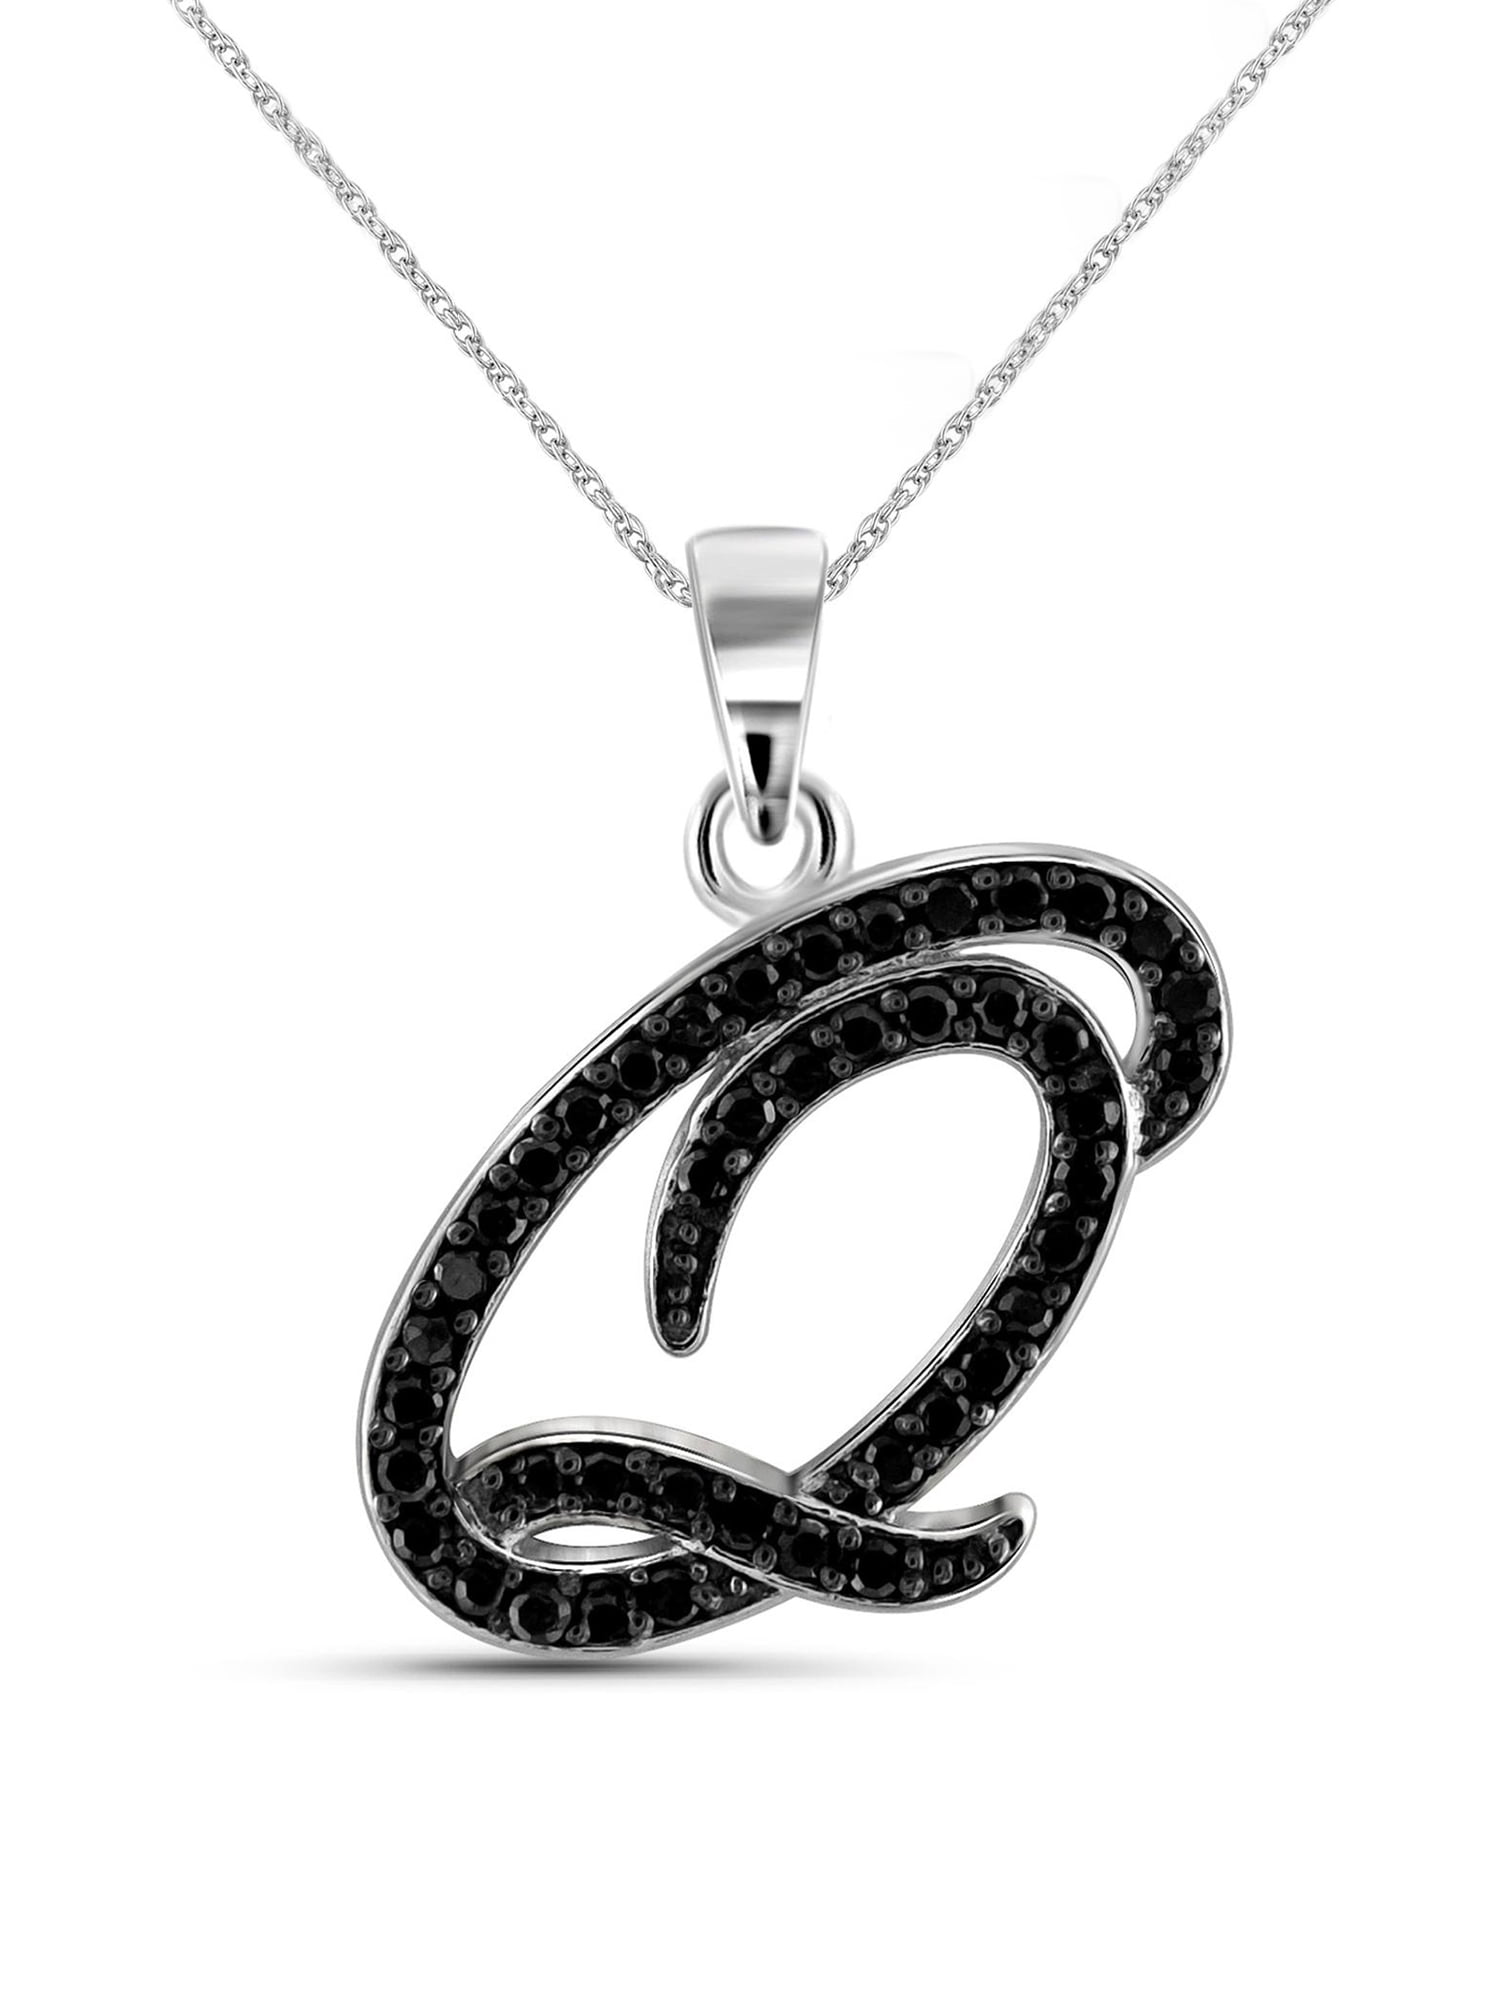 Jewelersclub Women's Initial Letter Pendant